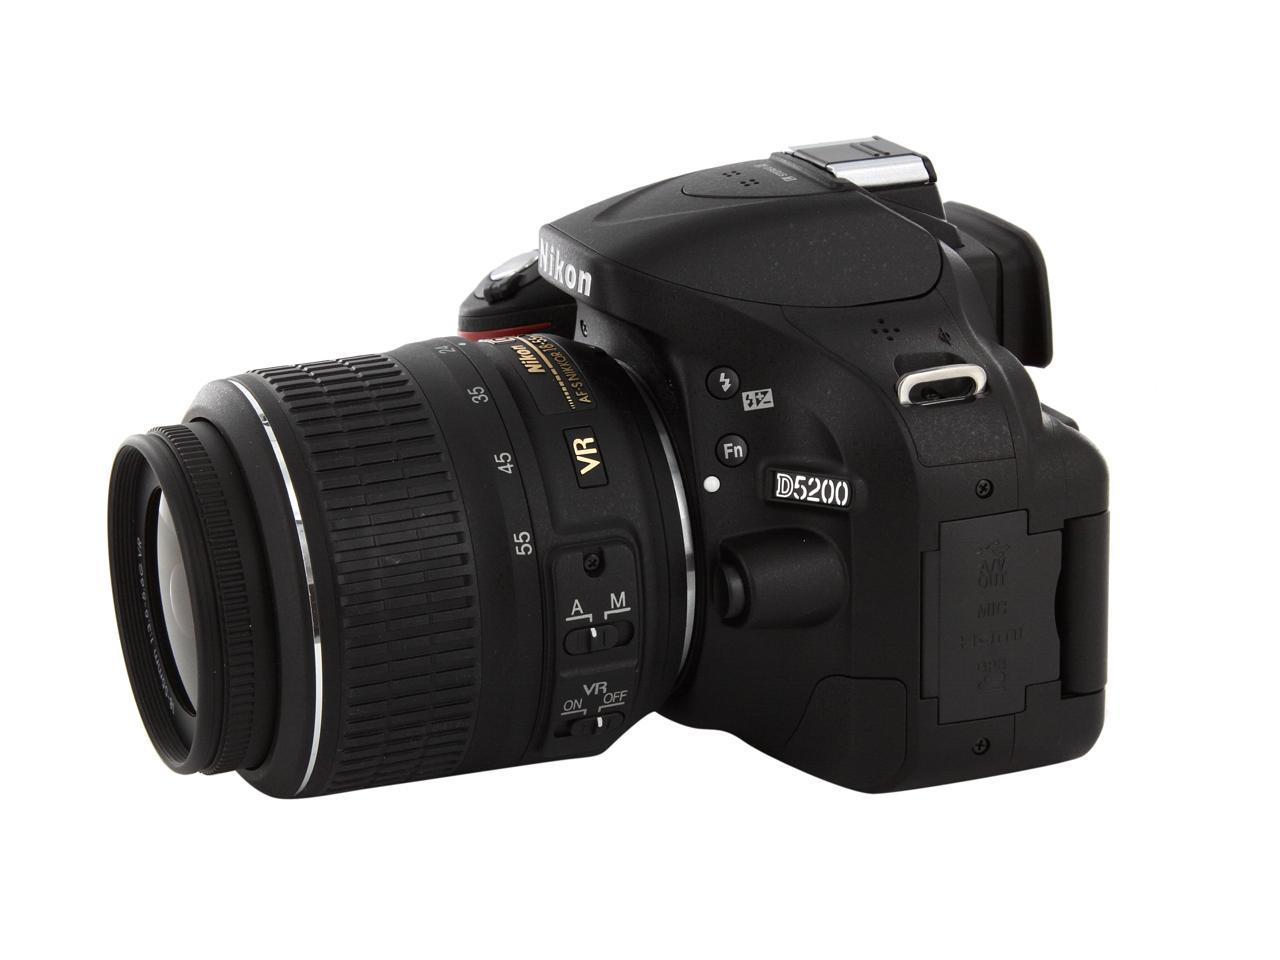 Nikon D5200 1503 Black Digital SLR Camera with 18-55mm VR Lens Kit